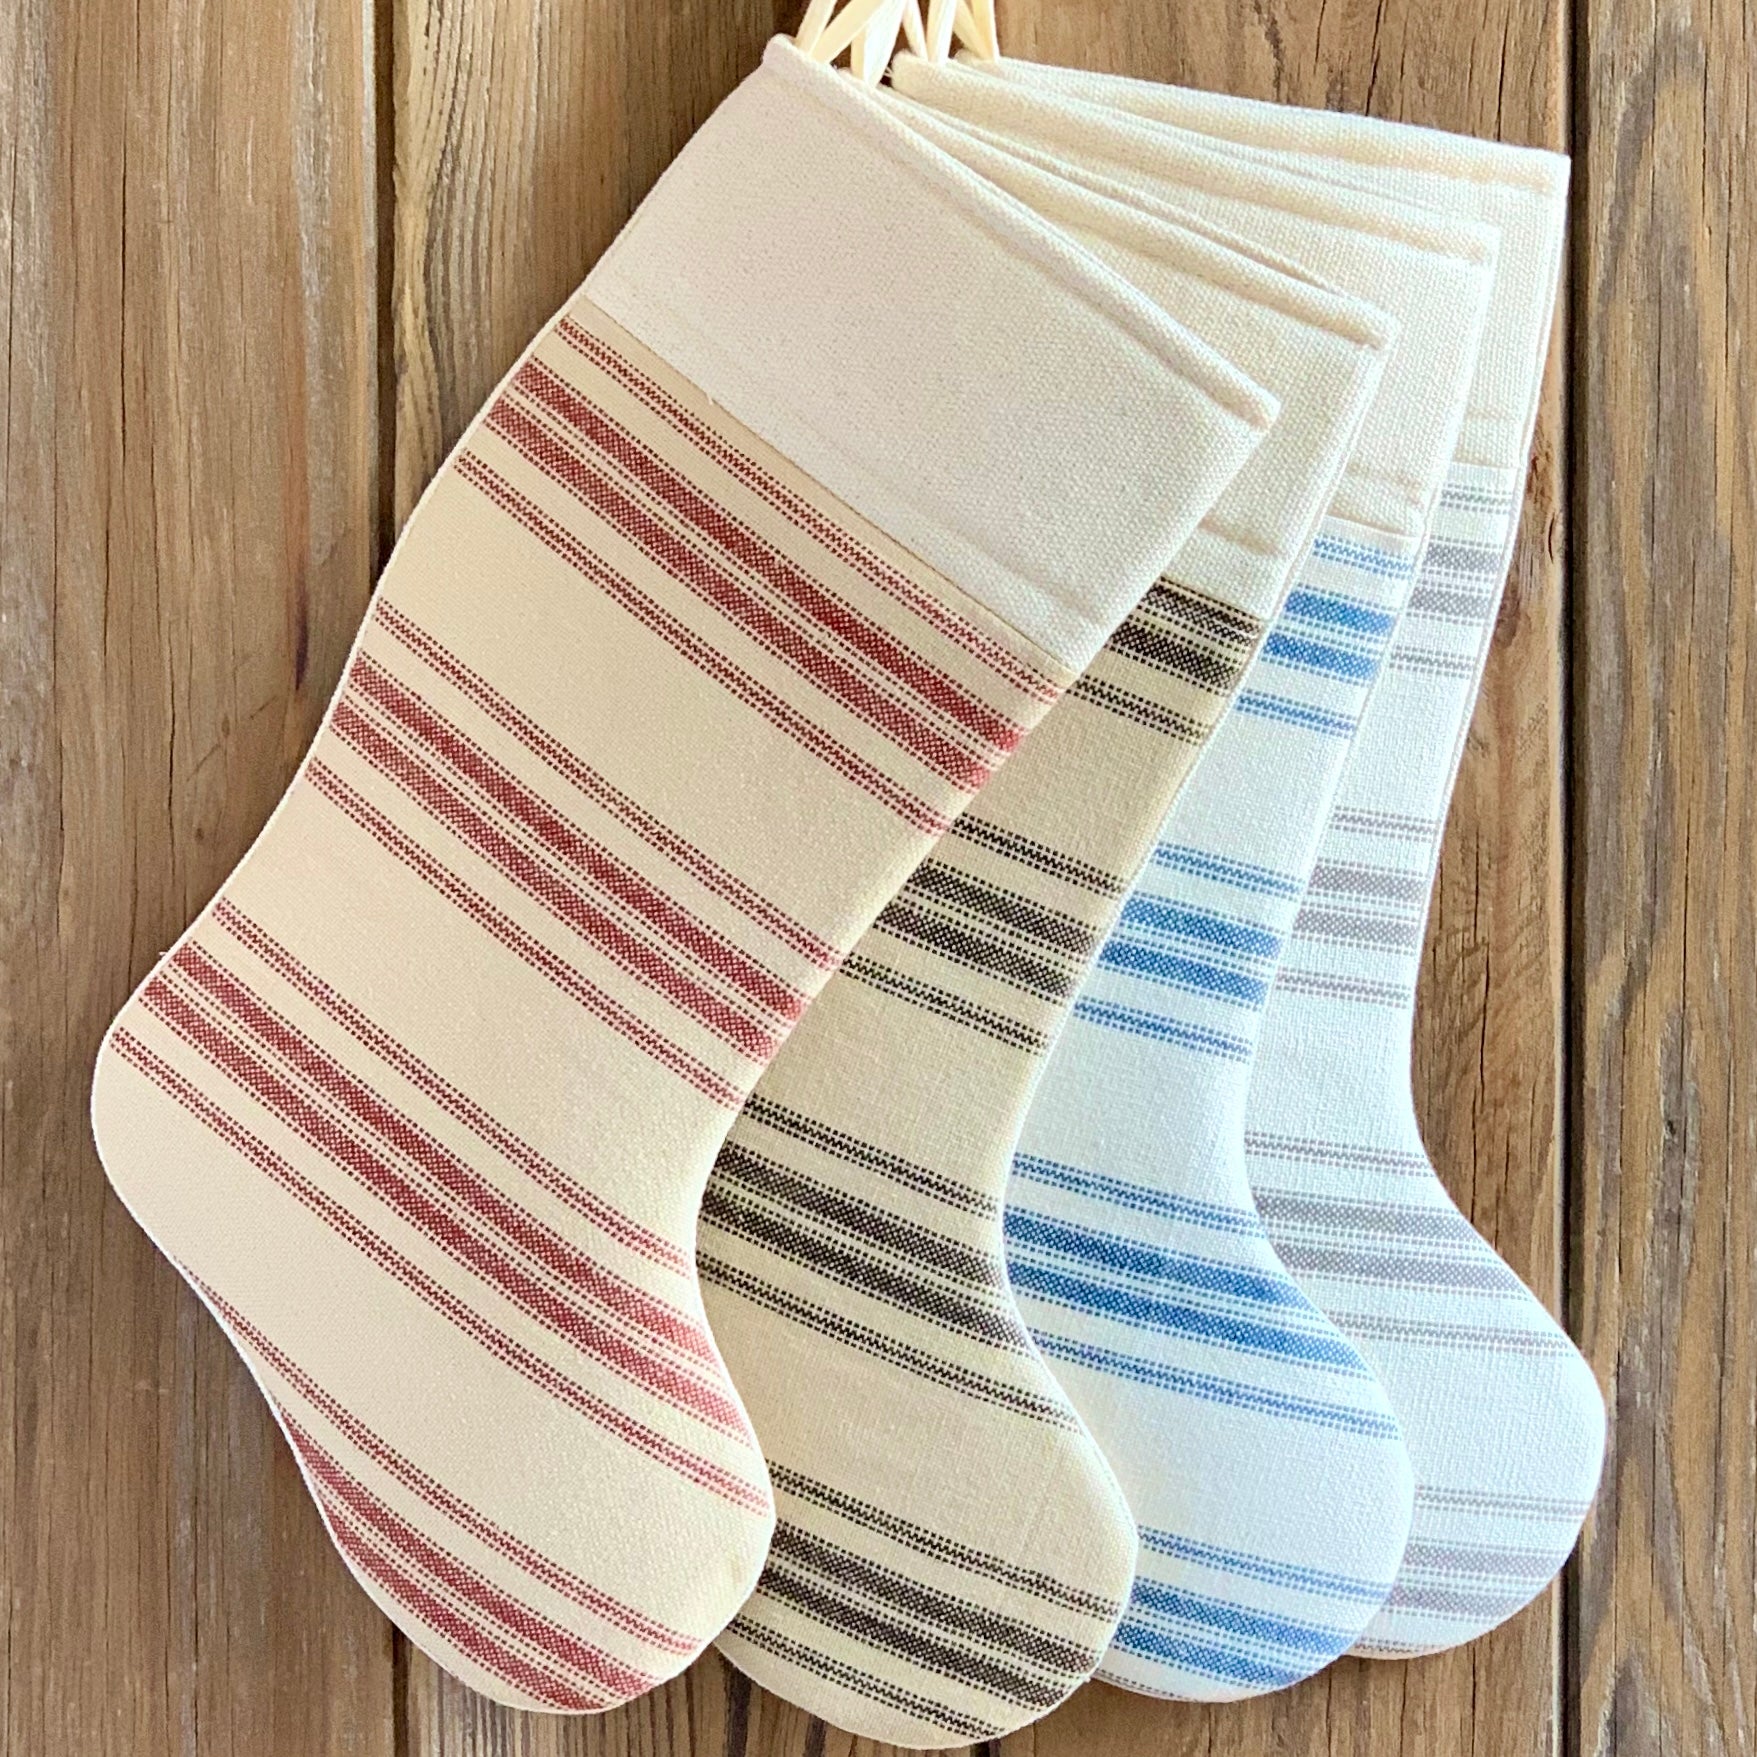 Grain Sack Christmas Stockings - Blue, Red, Black, and Gray - Horizontal Stripe